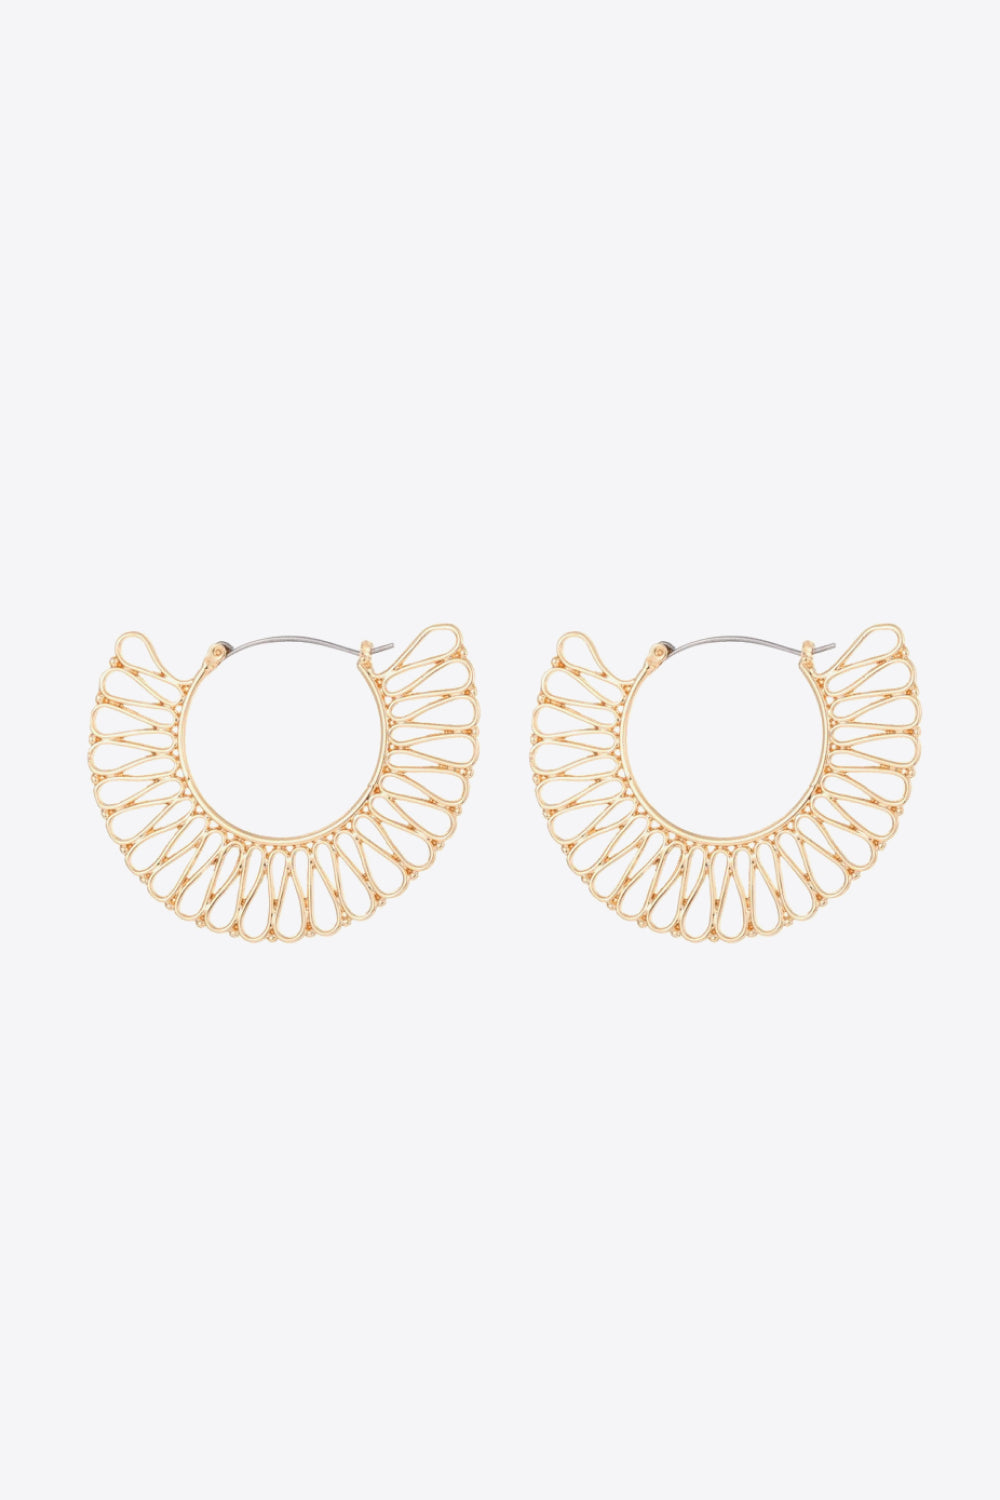 White Smoke 18K Gold-Plated Cutout Earrings Sentient Beauty Fashions earrings